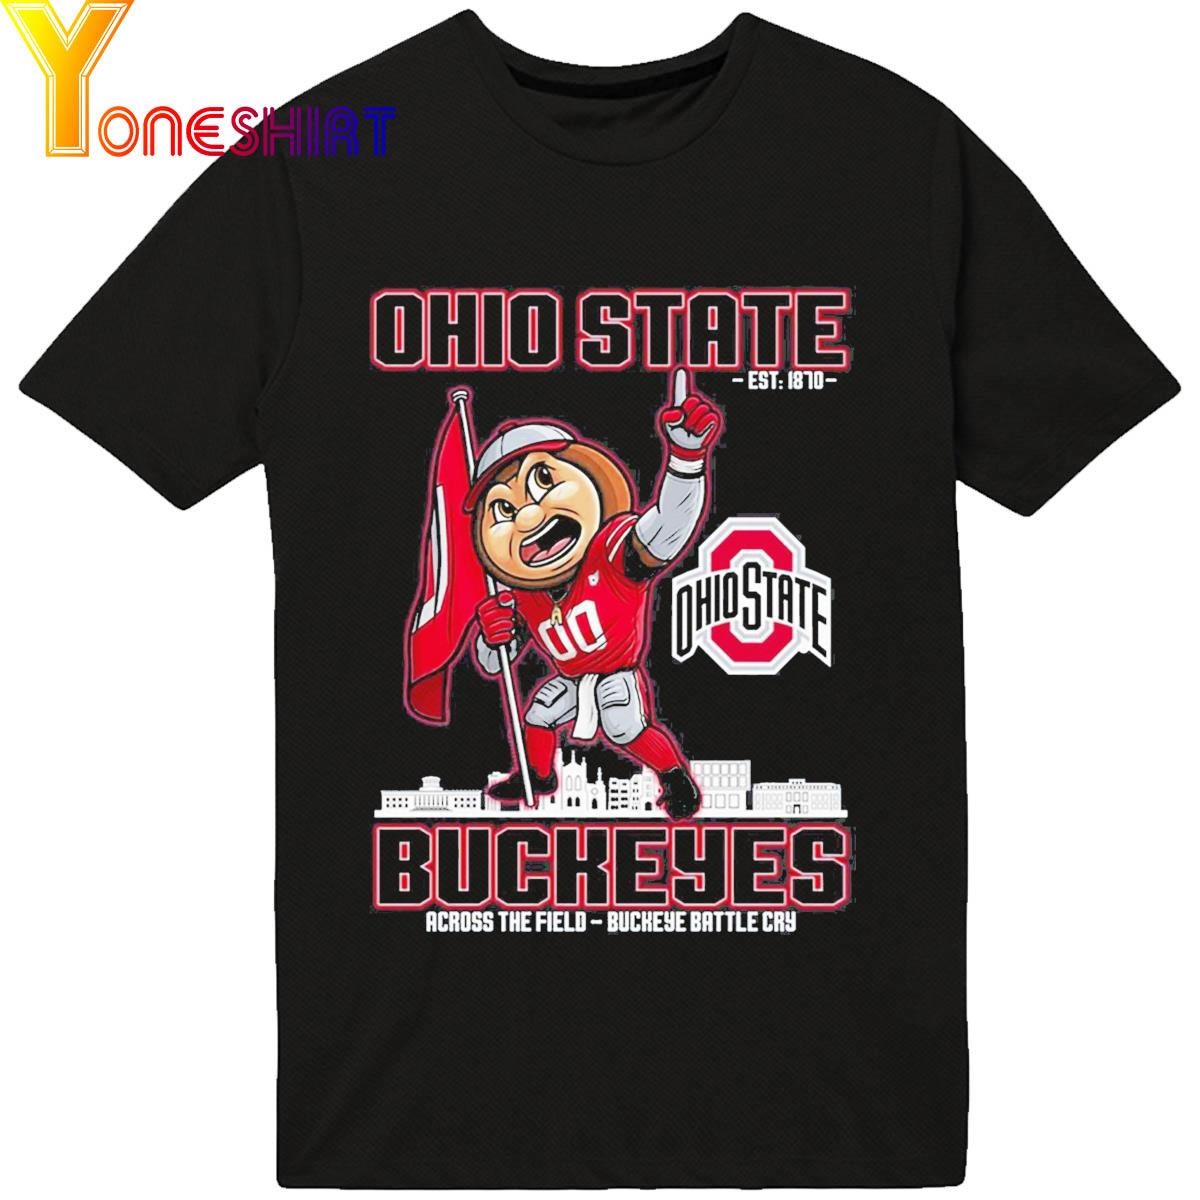 Ohio State Est 1870 Buckeyes Across The Field Buckeye Battle Cry T-Shirt